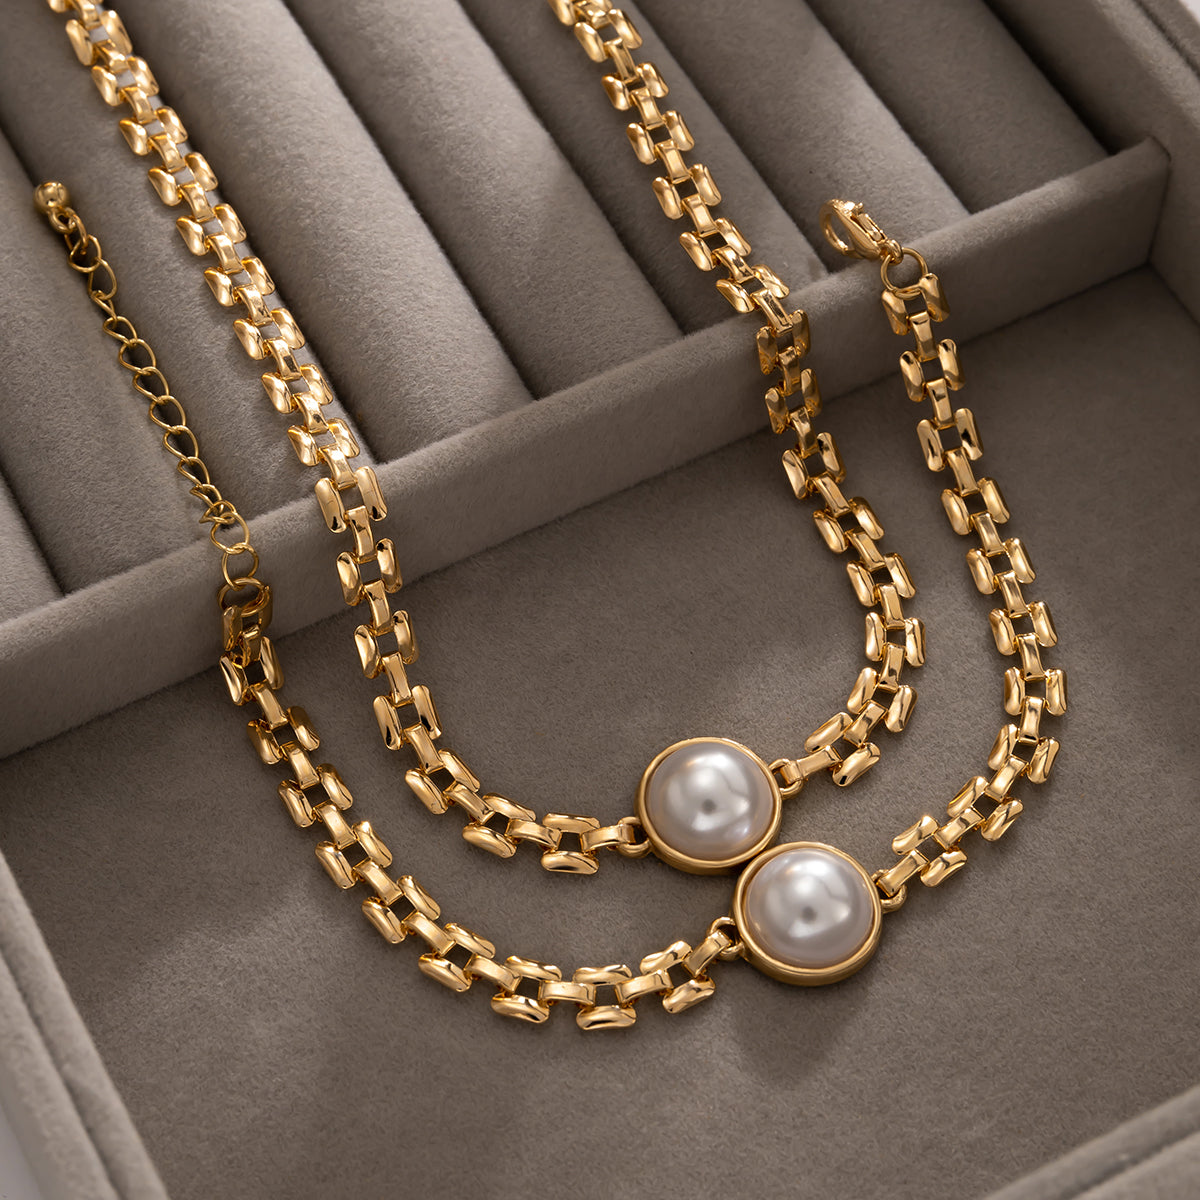 pearl chain choker necklace bracelet jewelry set